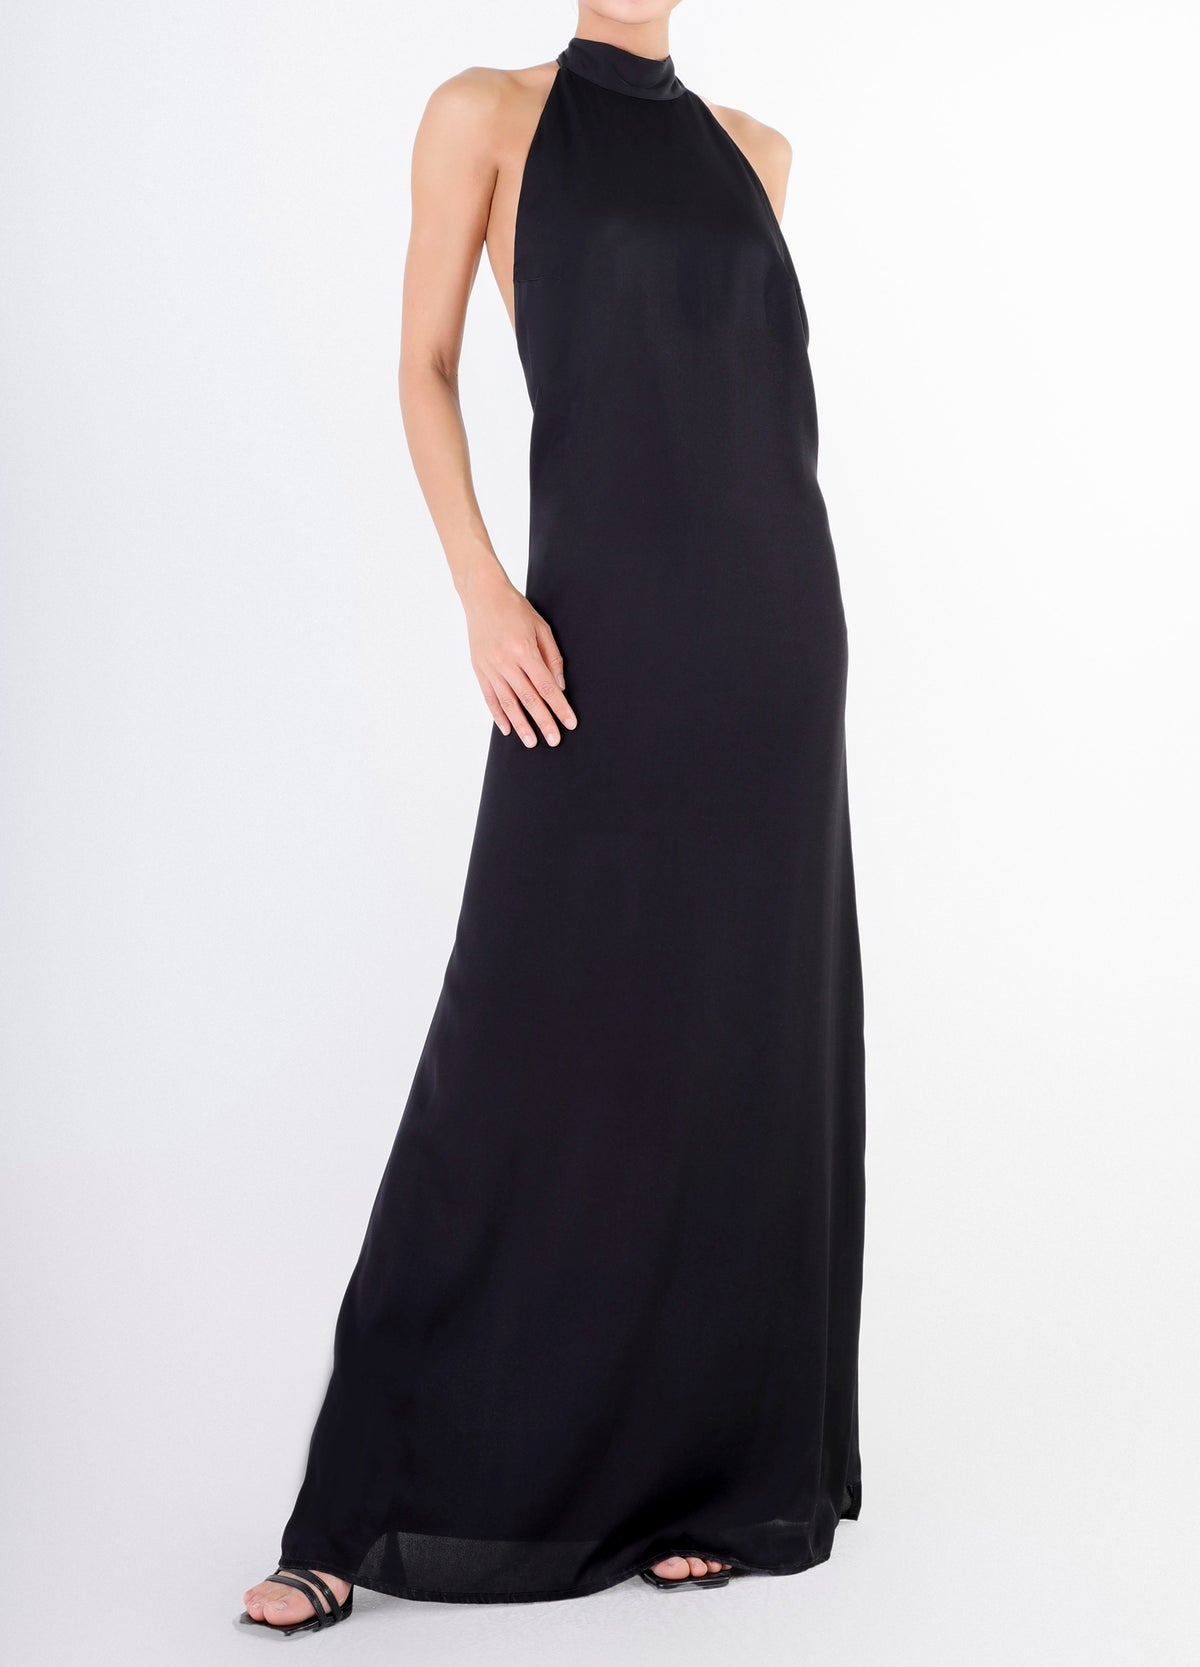 Margaux dress - Black